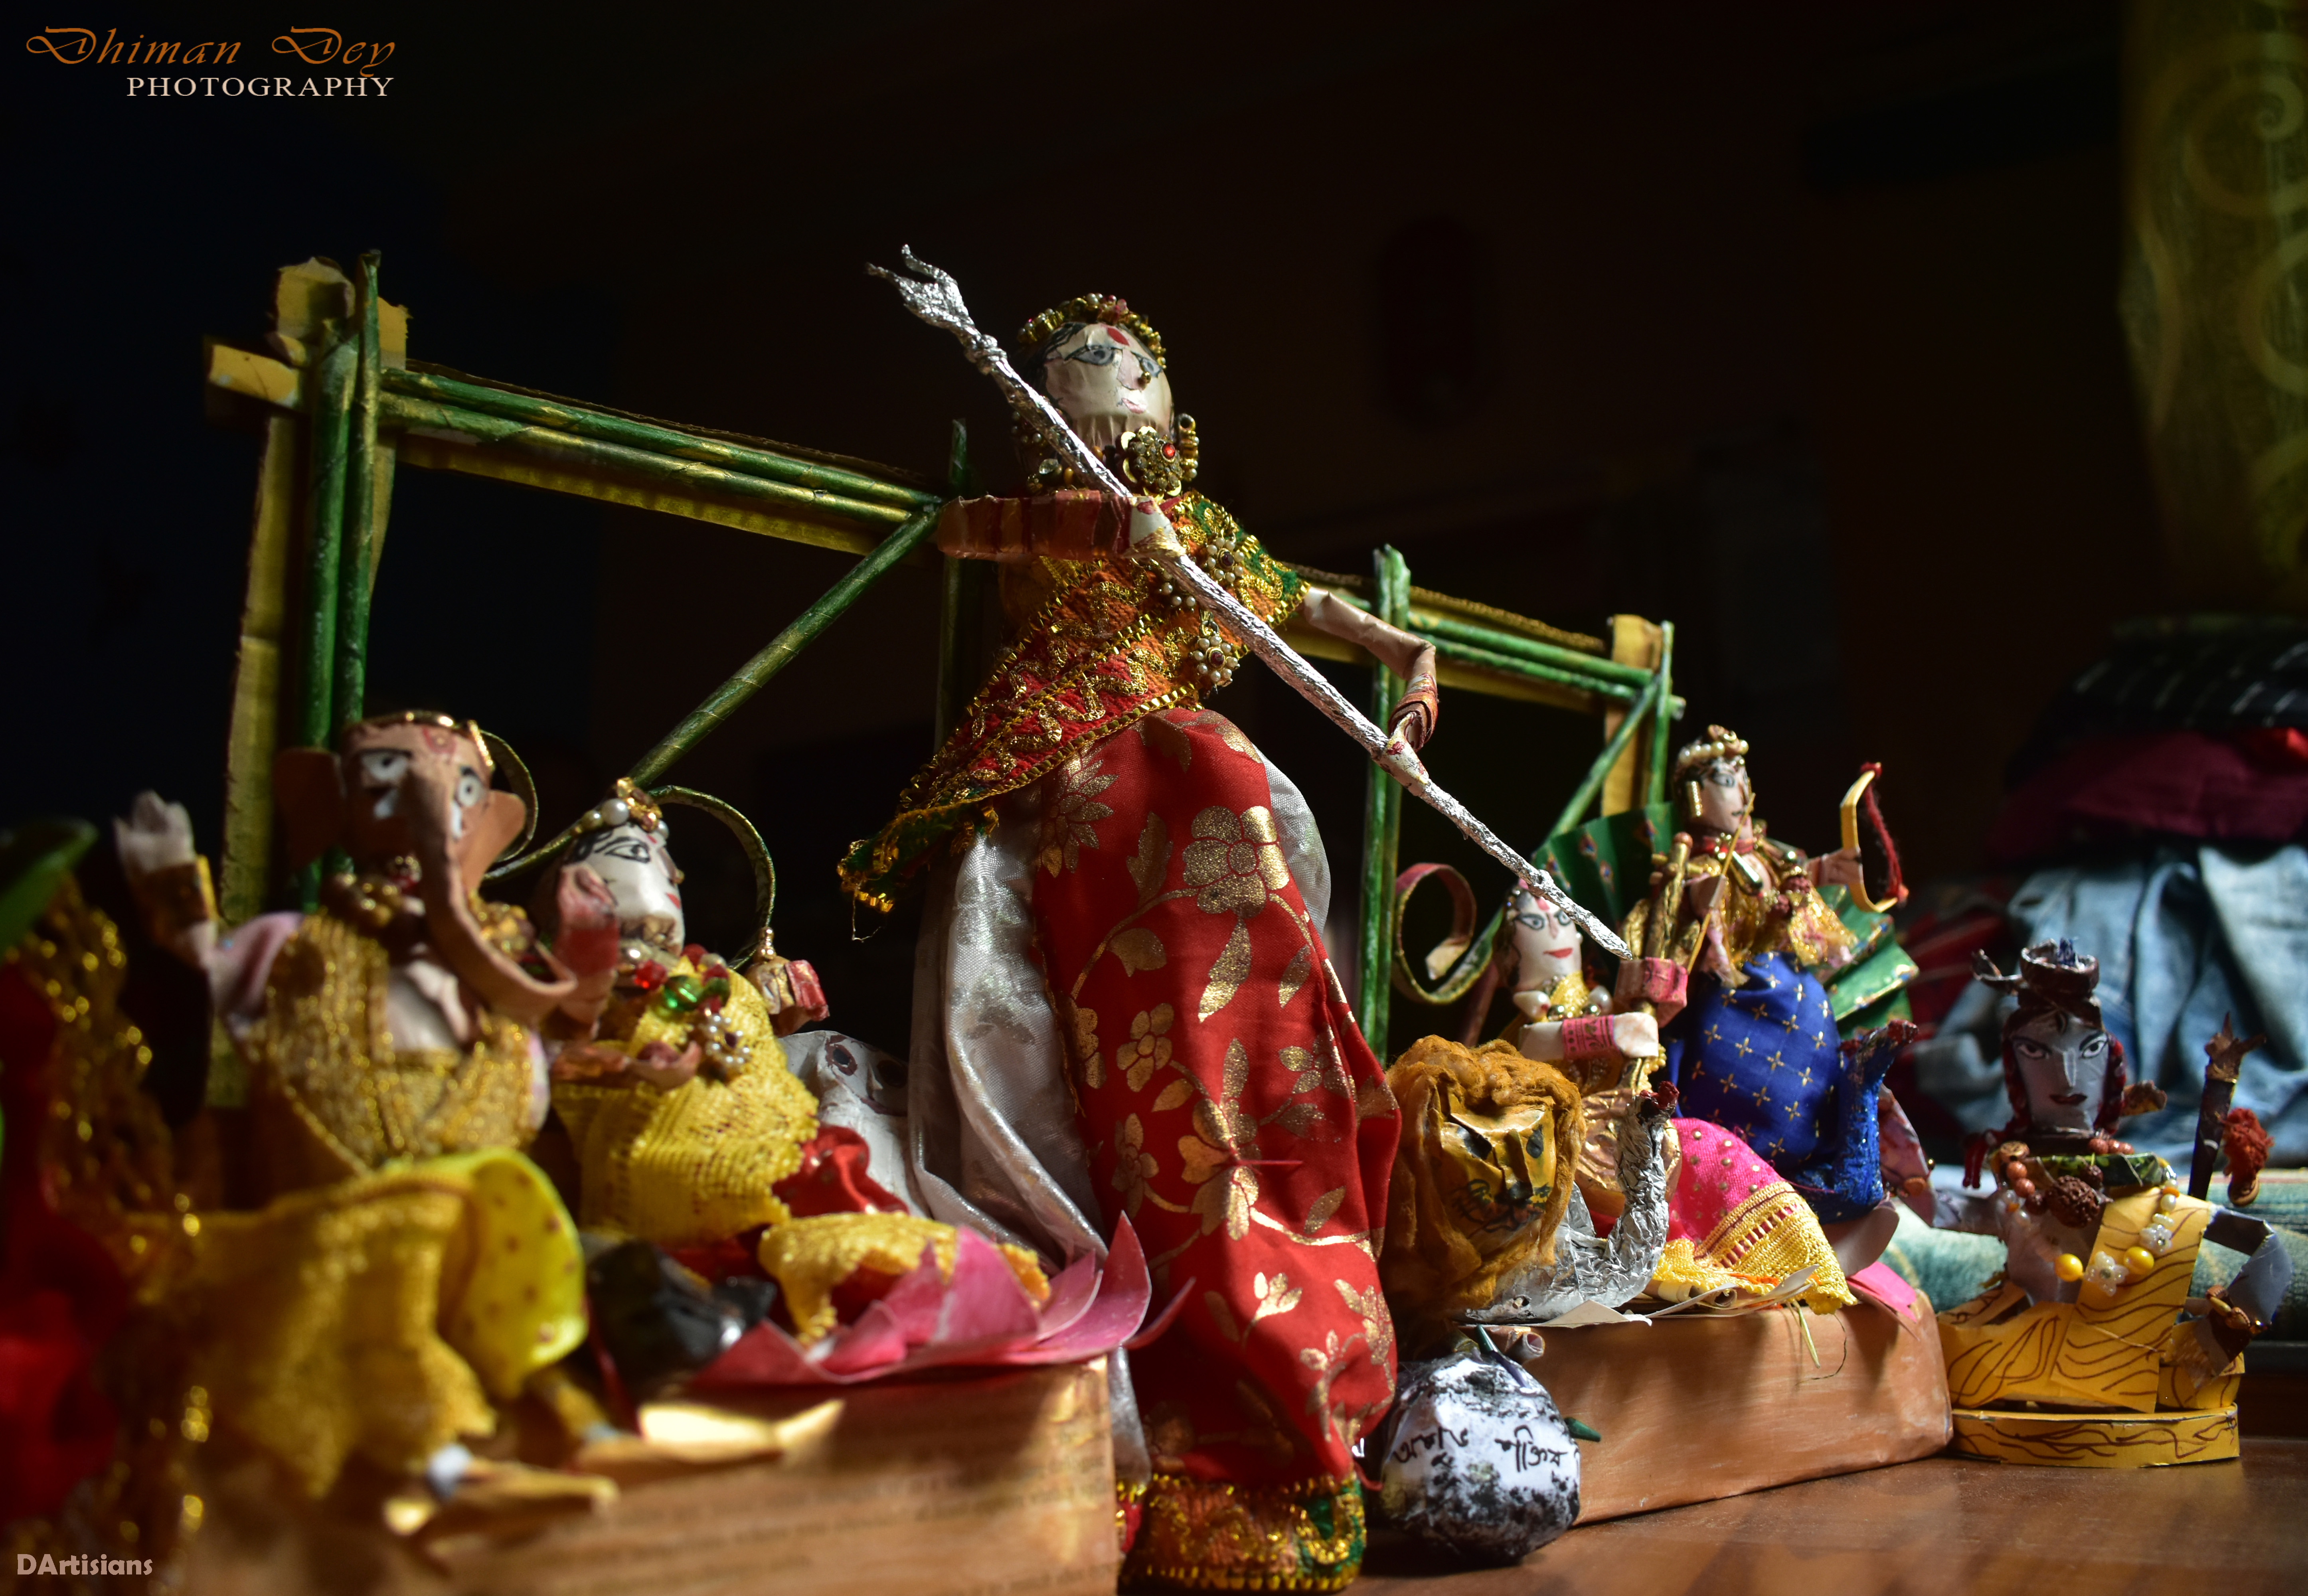 A Durga idol made of Scraps